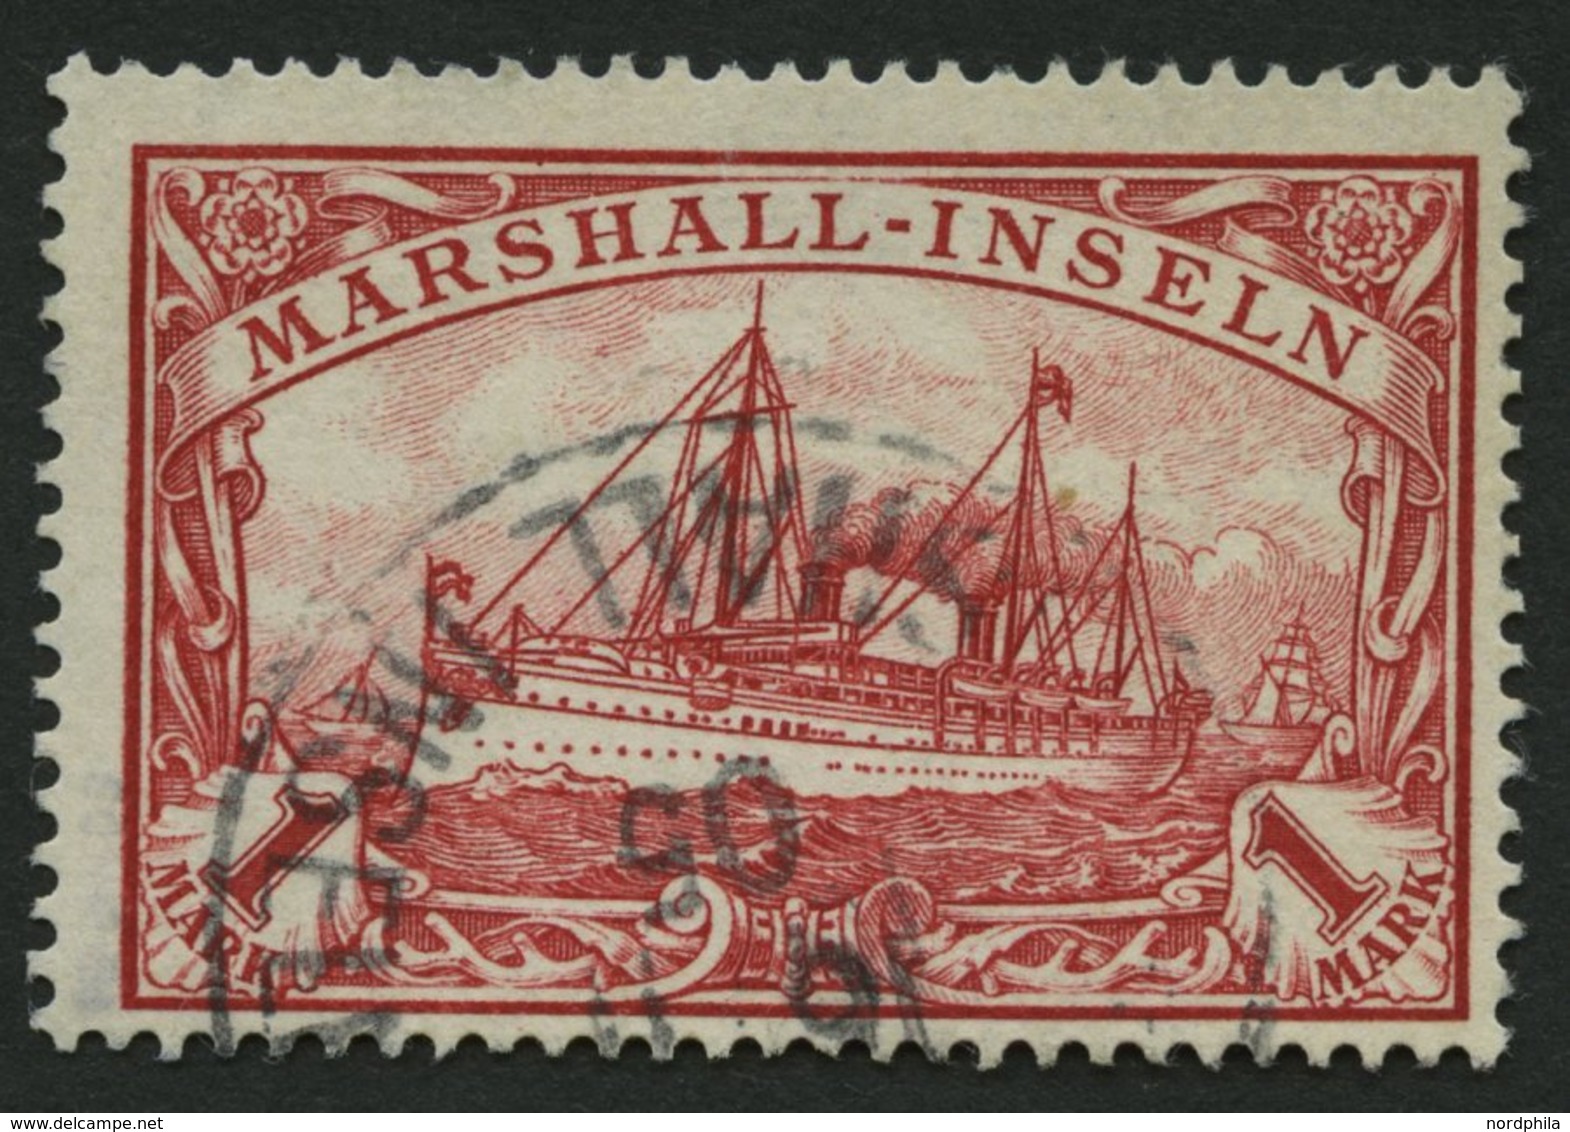 MARSHALL-INSELN 22 O, 1901, 1 M. Rot, Pracht, Gepr. Bothe, Mi. 100.- - Marshall